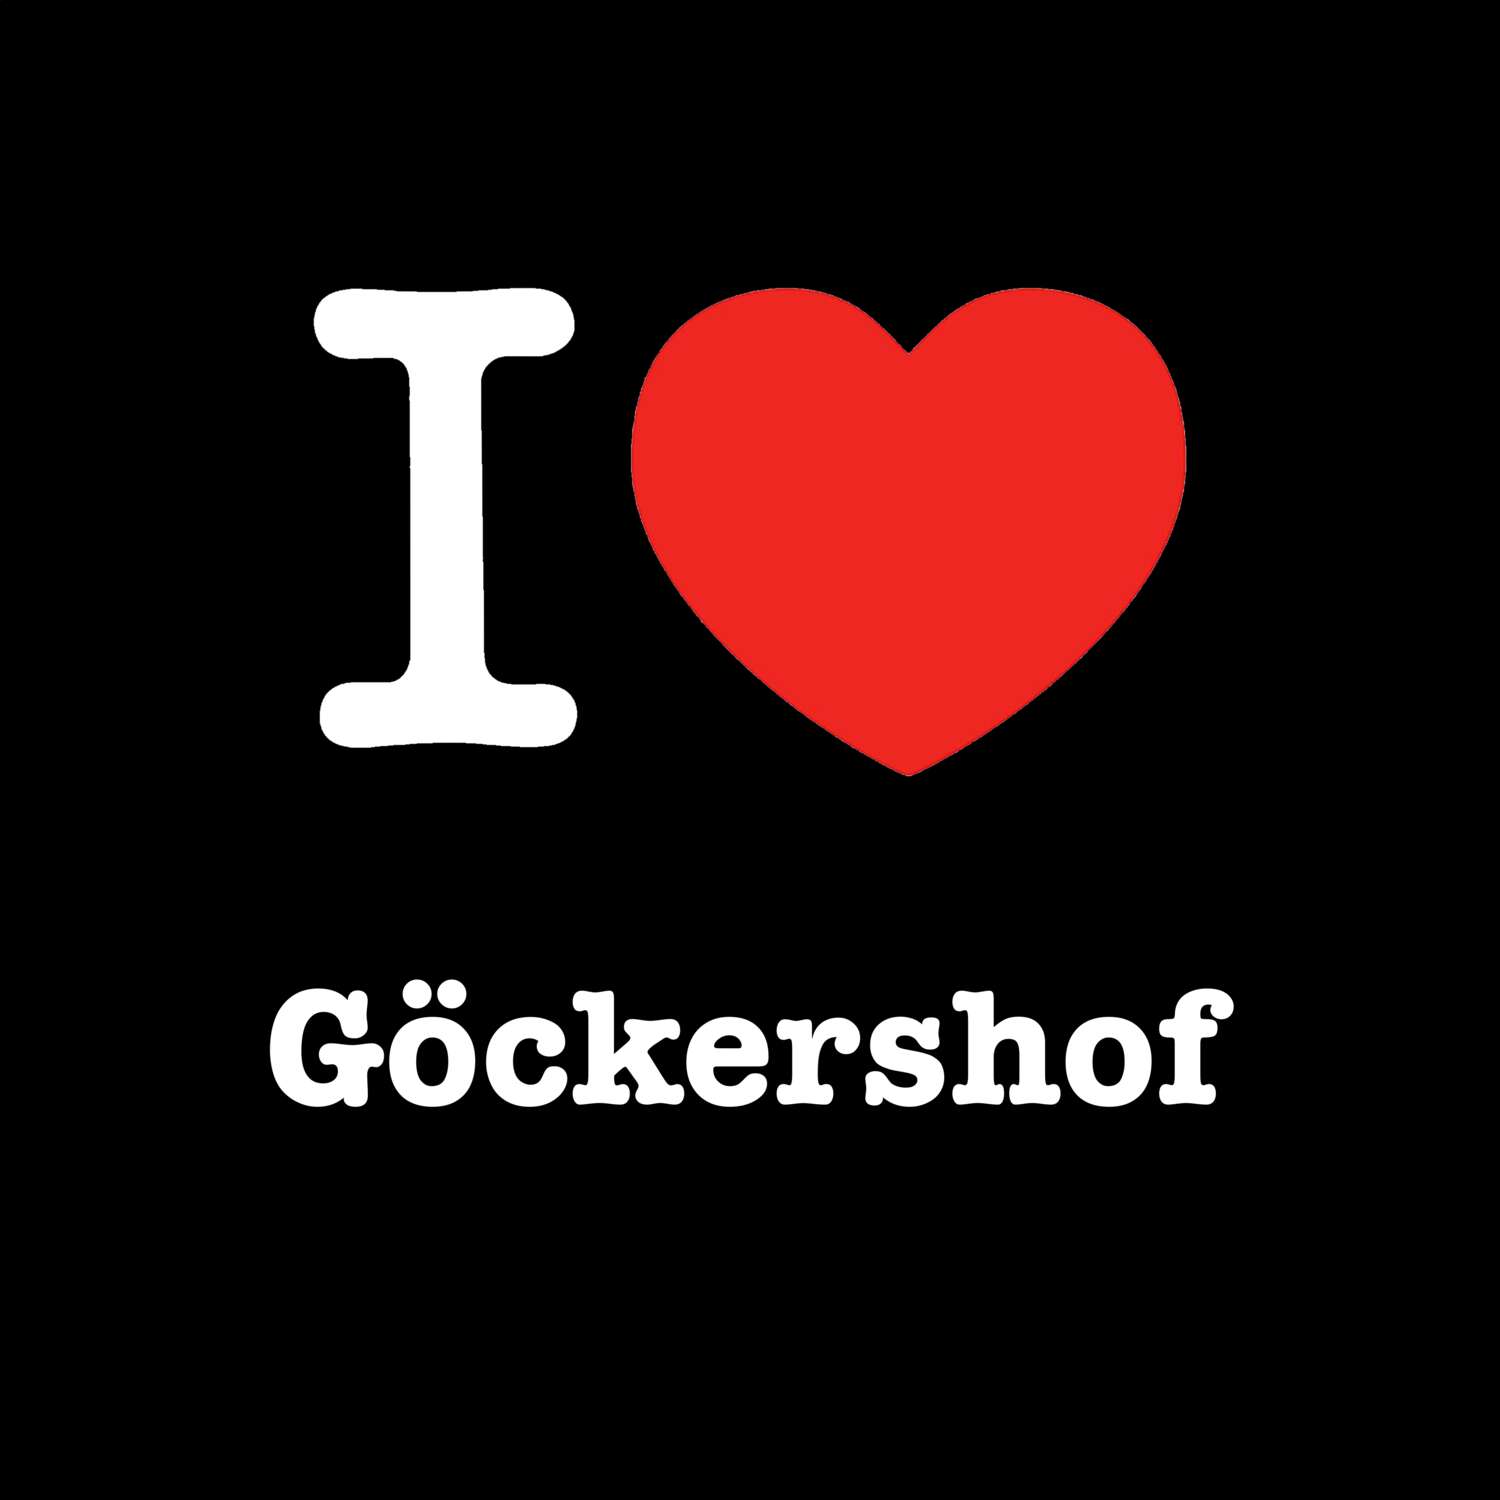 Göckershof T-Shirt »I love«